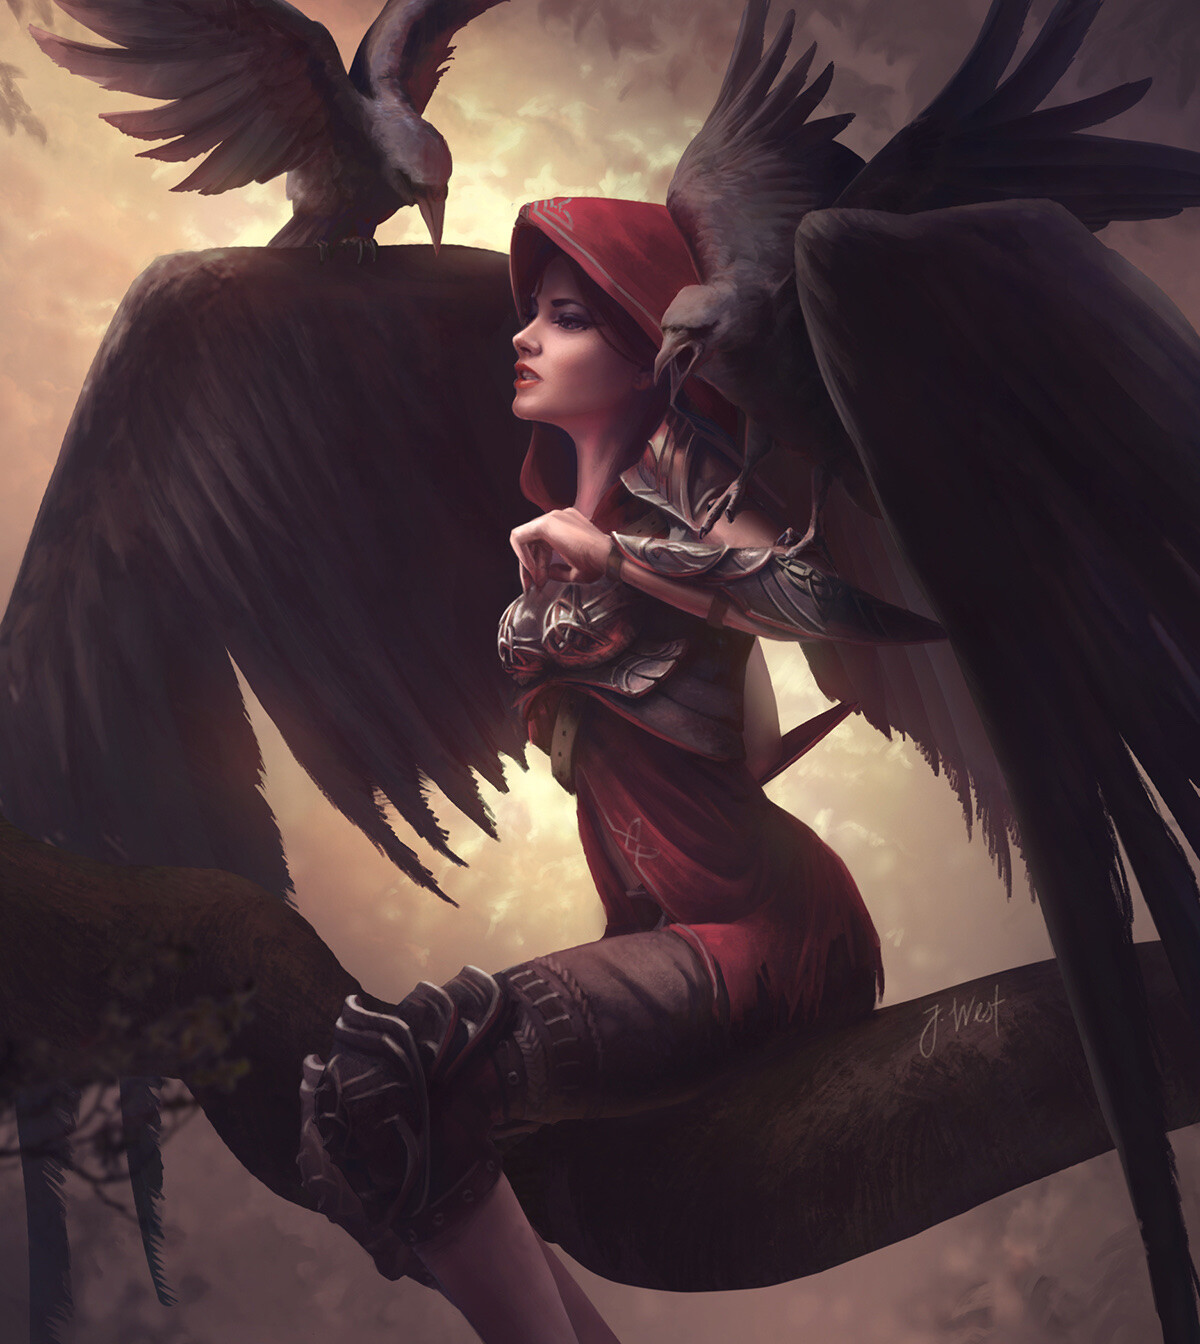 Poe morrigan. Морриган богиня. Морриган богиня арт. Врана Морриган с воронами. Девушка птица фэнтези.